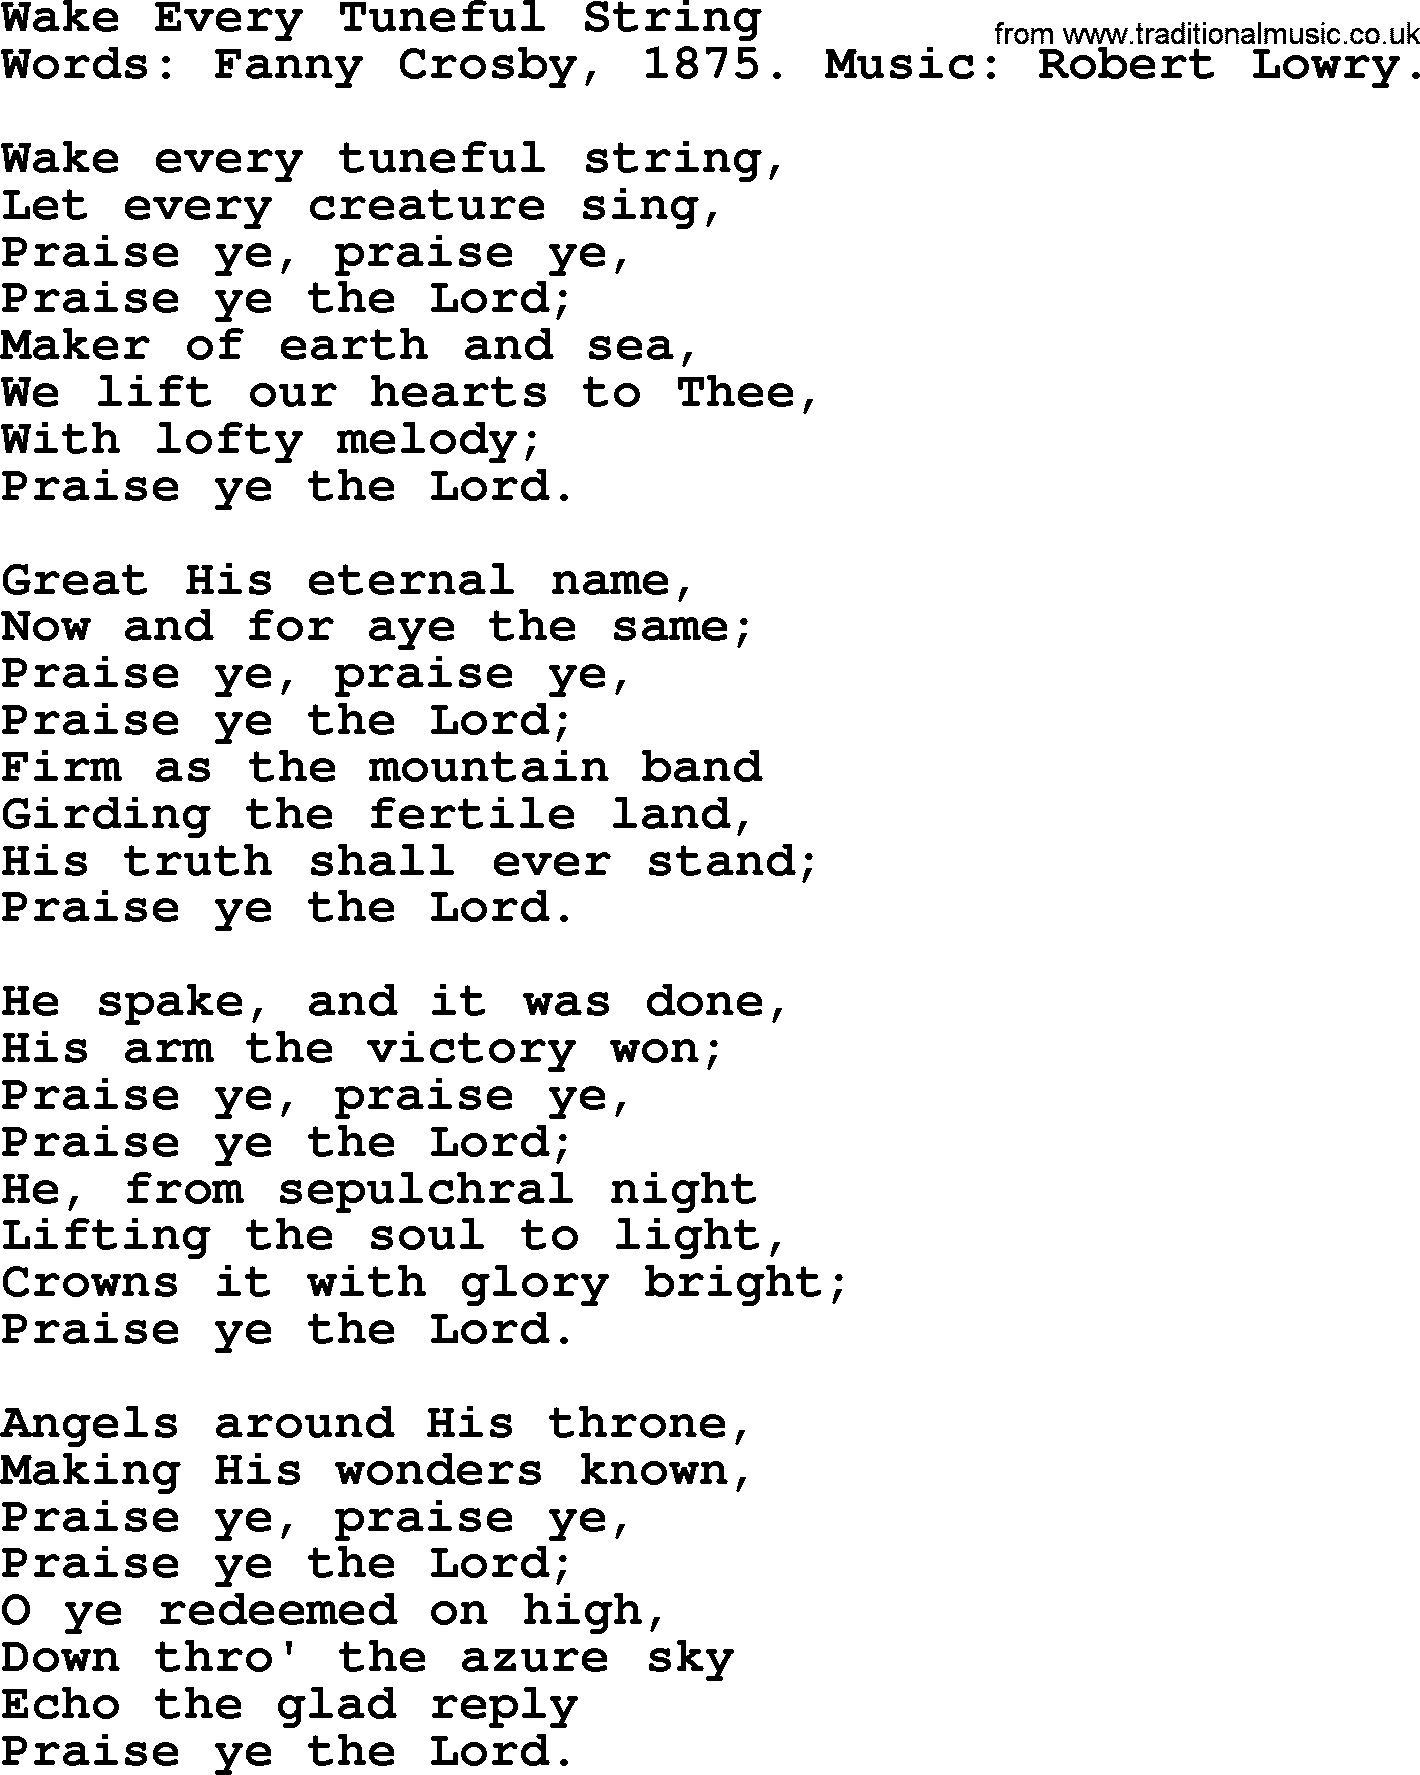 Fanny Crosby song: Wake Every Tuneful String, lyrics